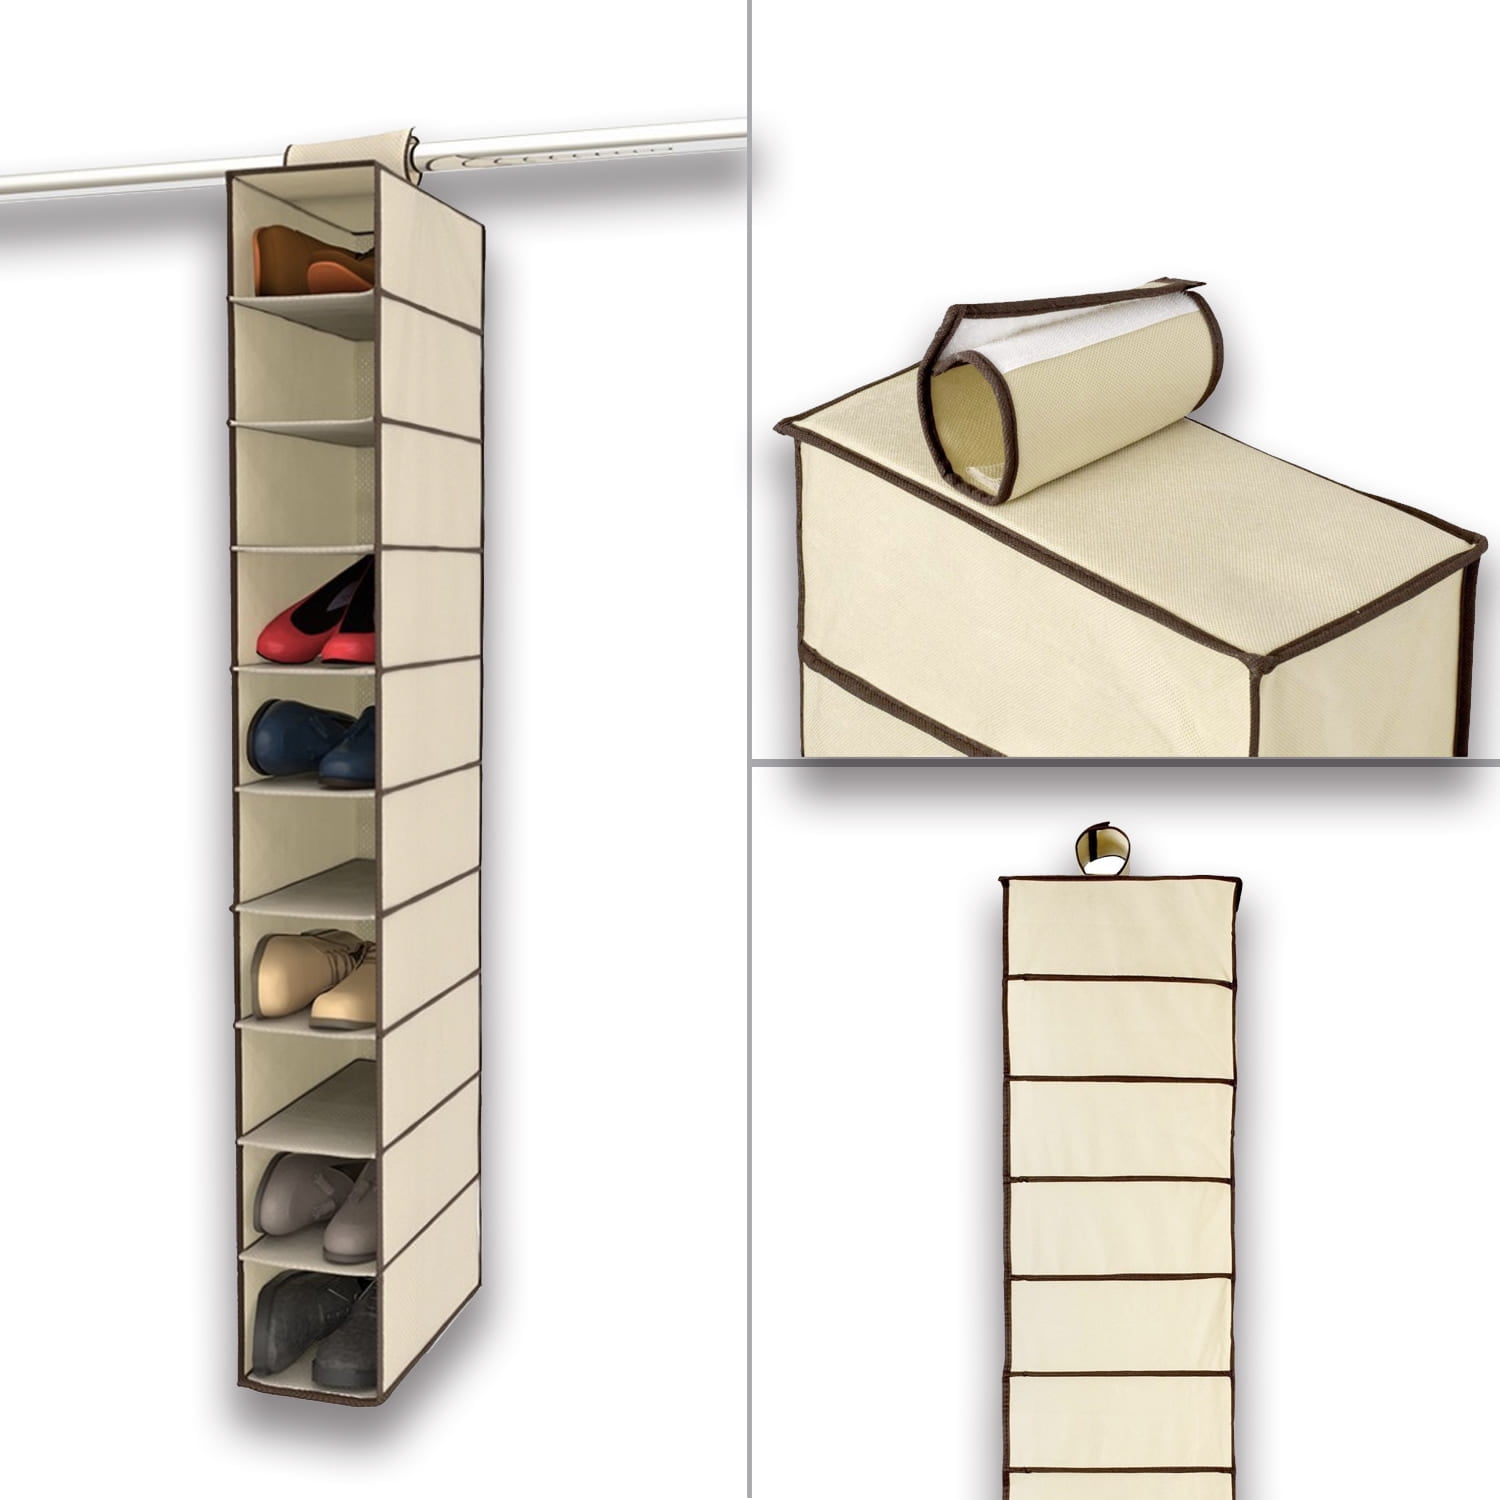 ZOBER 10-Shelf Hanging Shoe Organizer Breathable Polypropylene 10 Mesh Pockets for Accessories 2 Pack, Black 5 ½” x 10 ½” x 54” Shoe Holder for Closet